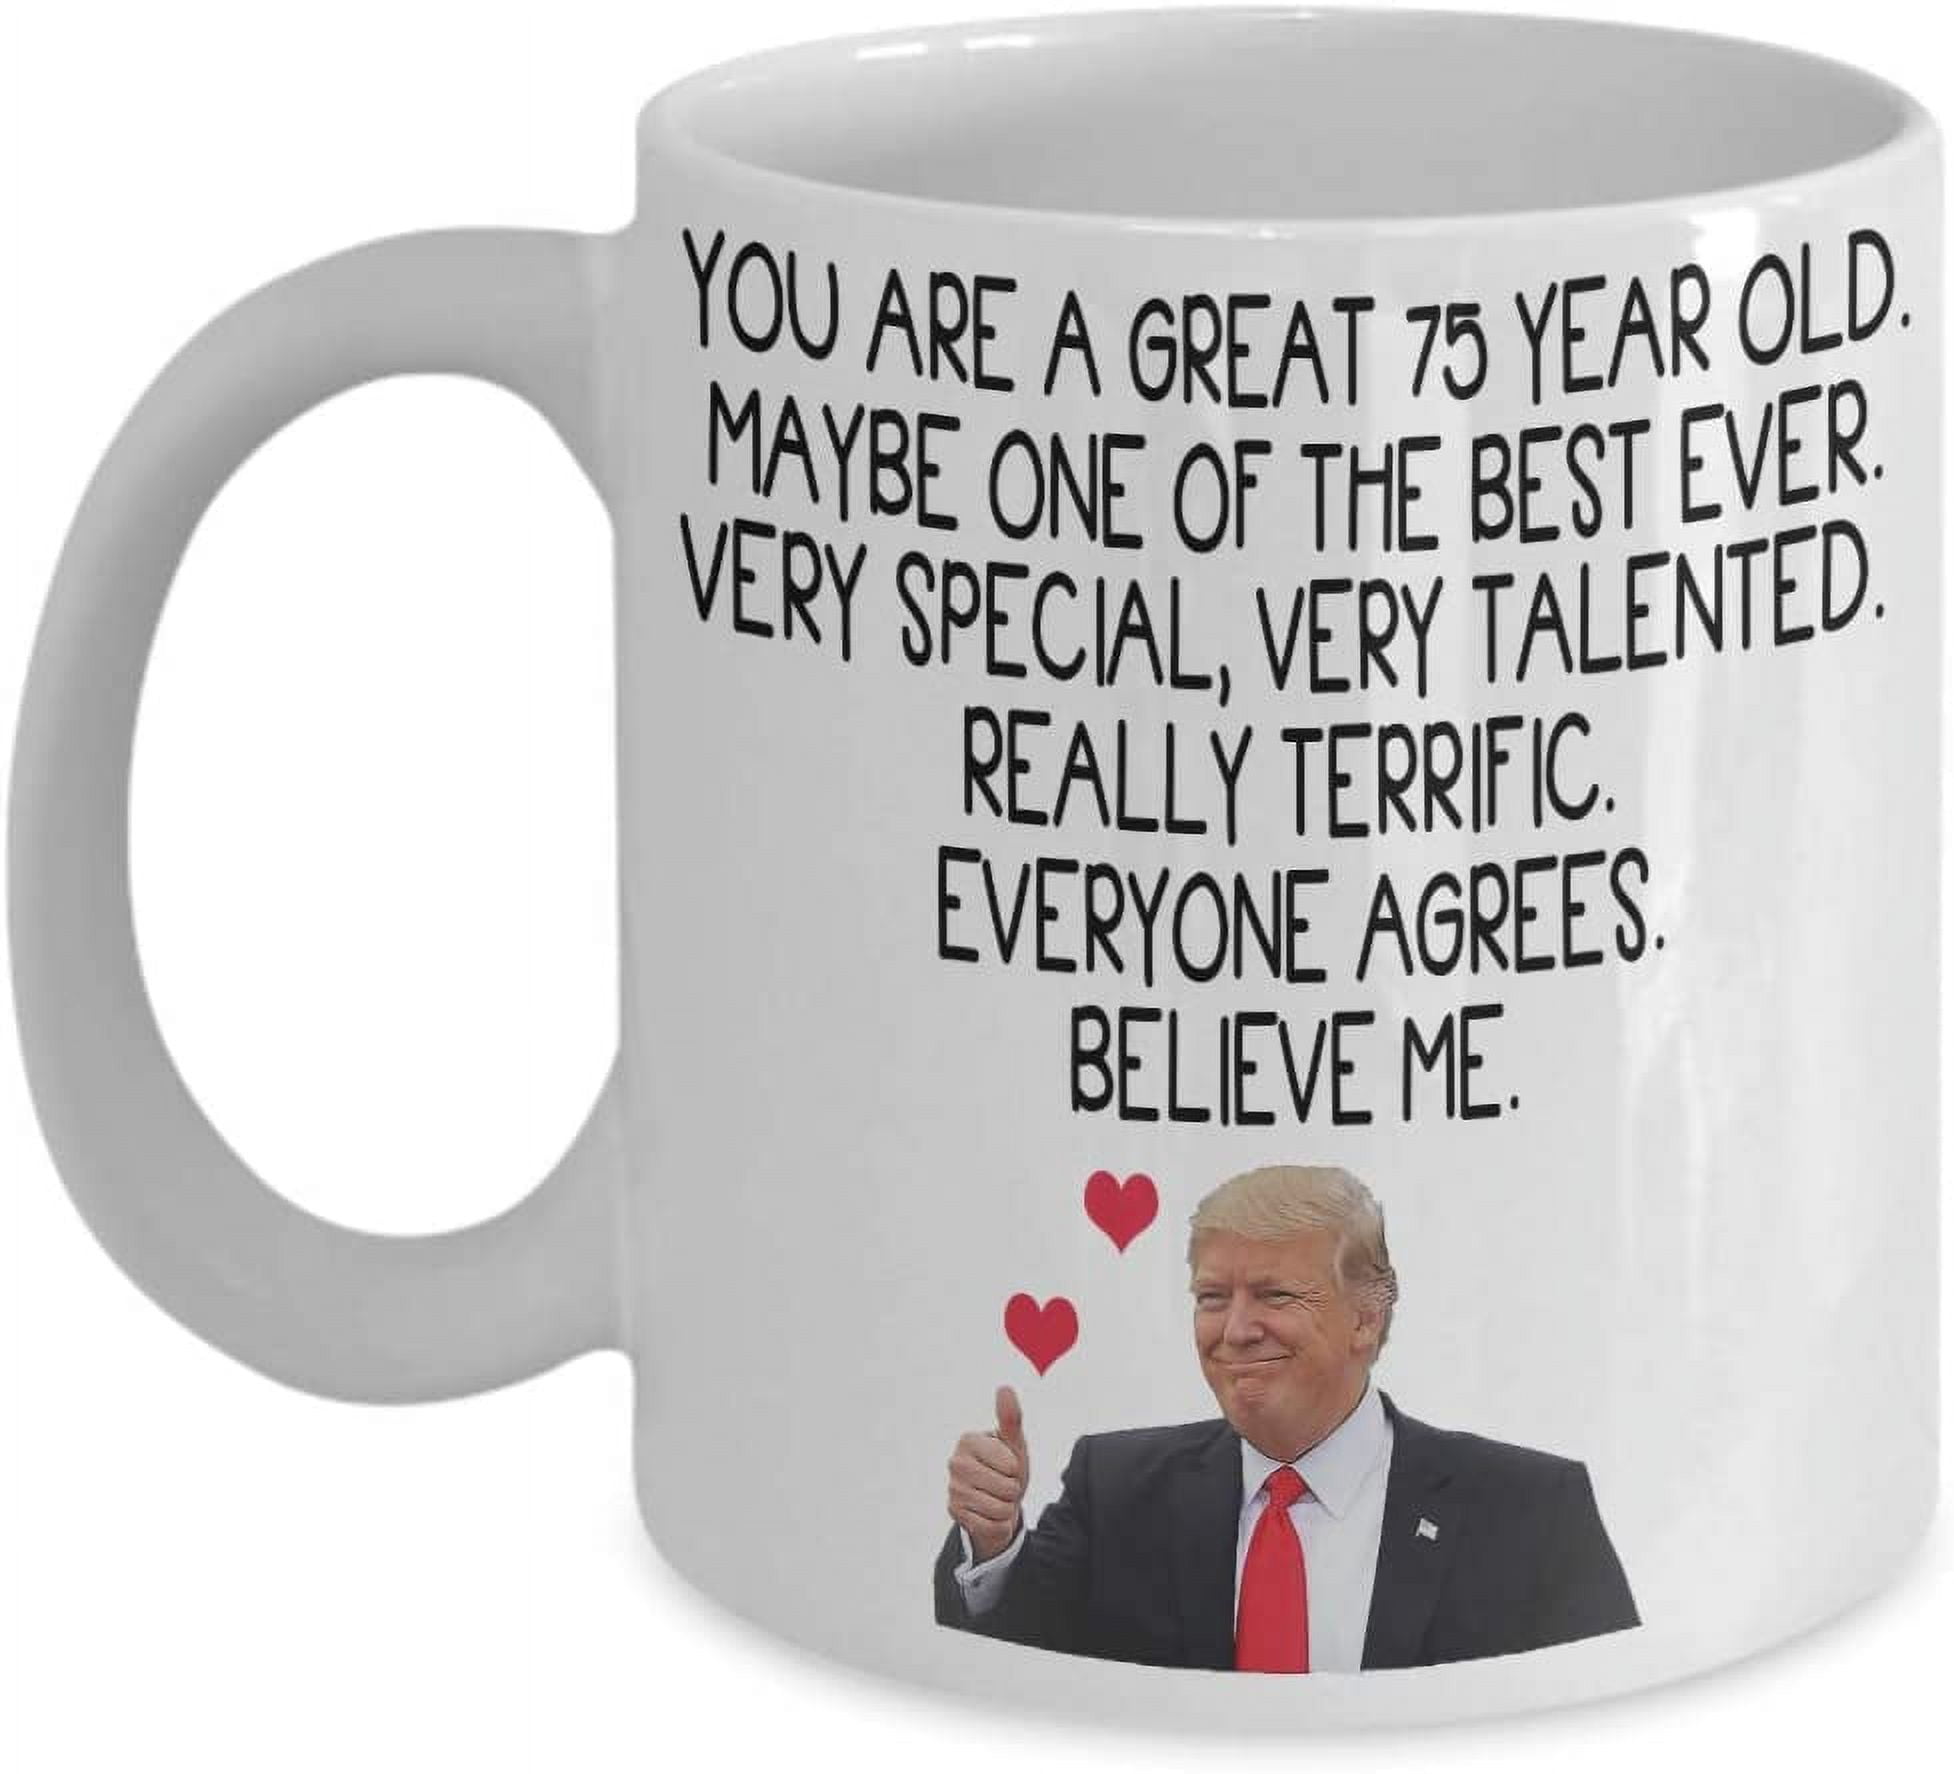 Women For Trump Coffee Mug